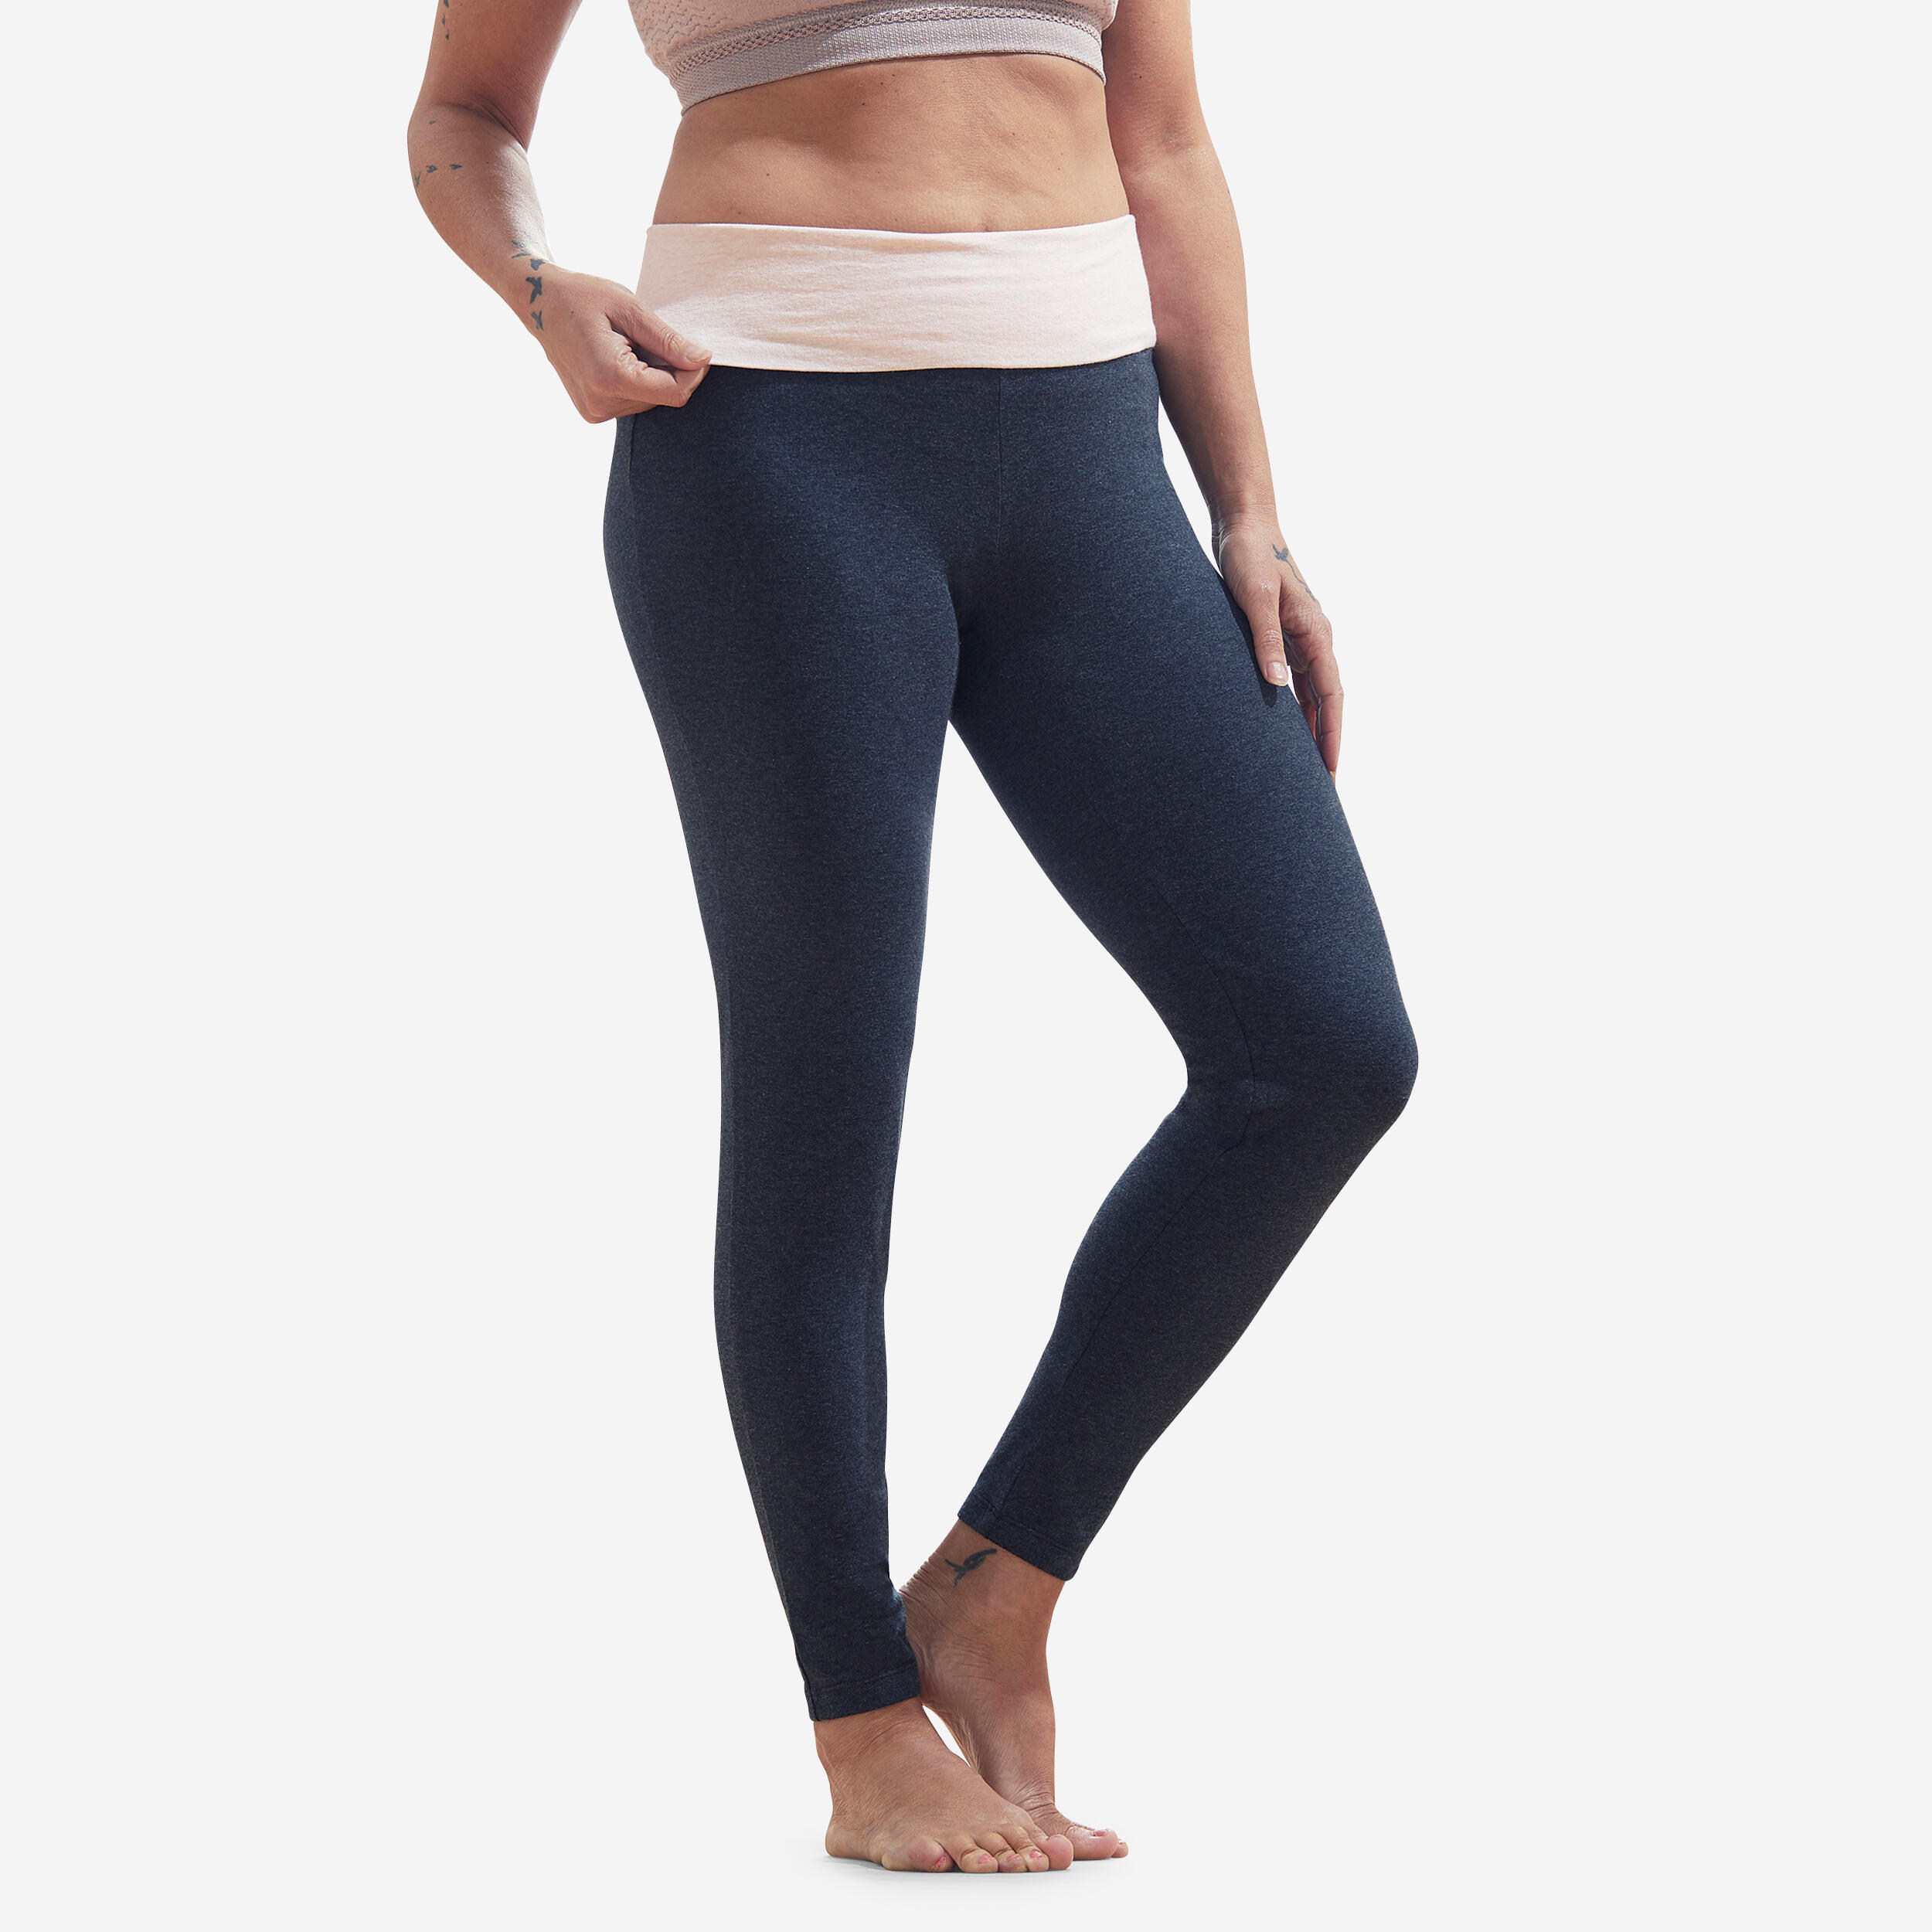 KIHOUT Pants For Women Deals Women's Comfortable Cropped Leisure Time Pants  Sweatpants Yoga Pants 